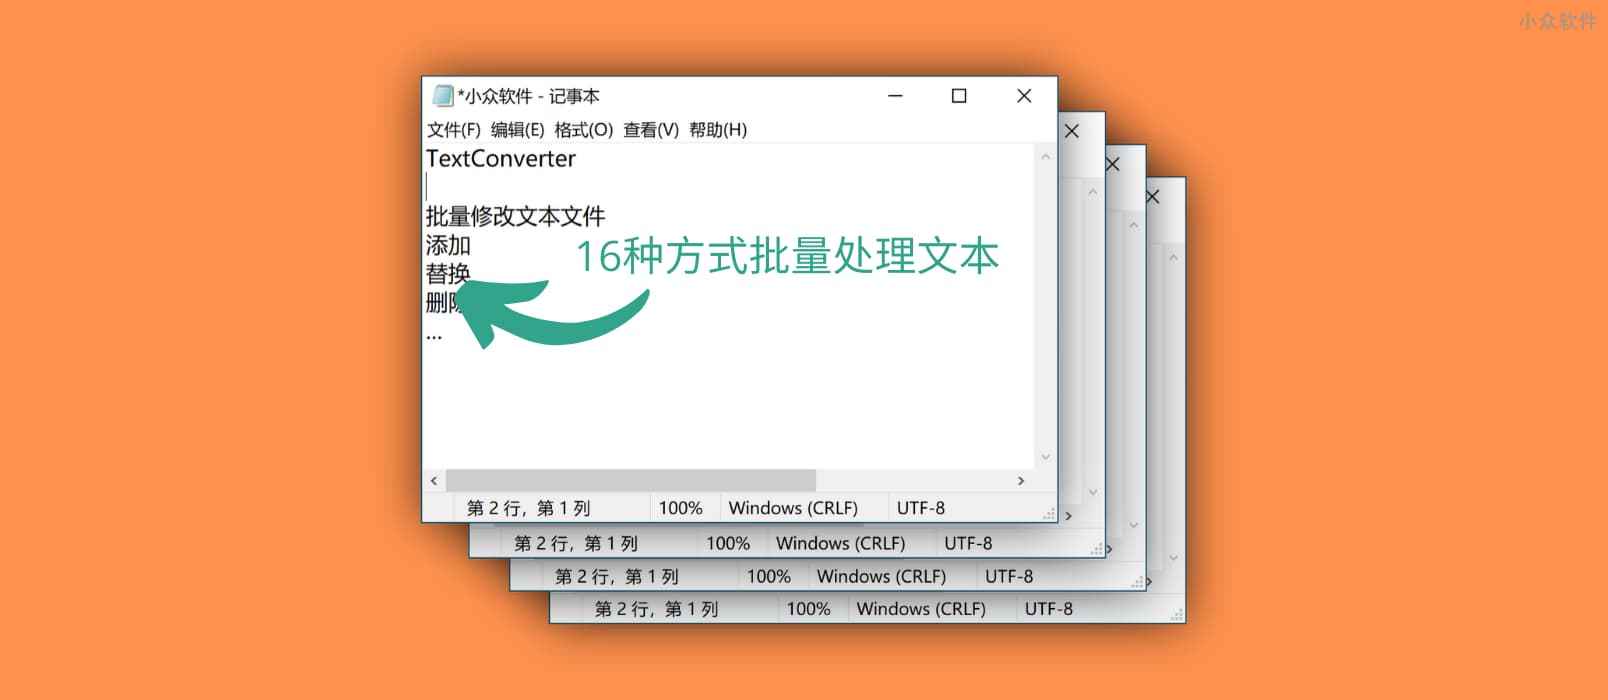 TextConverter - 16 种方式，批量处理文本文件，生产力工具[Windows] 1